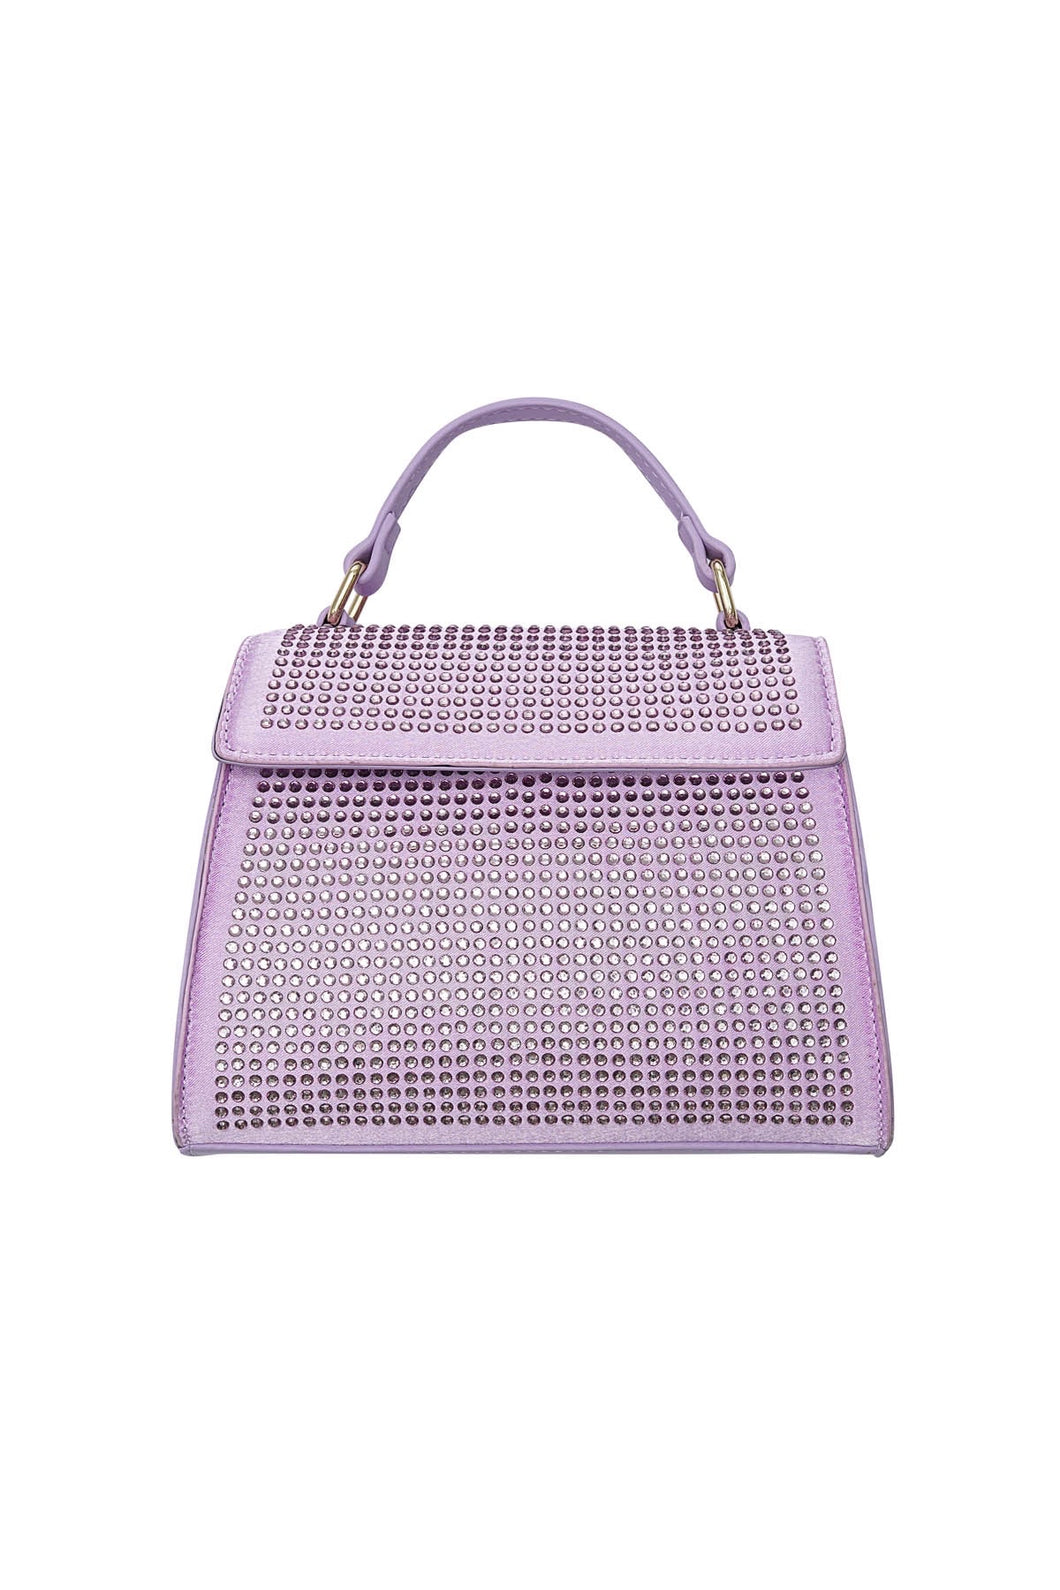 Chique glitter purple - bag